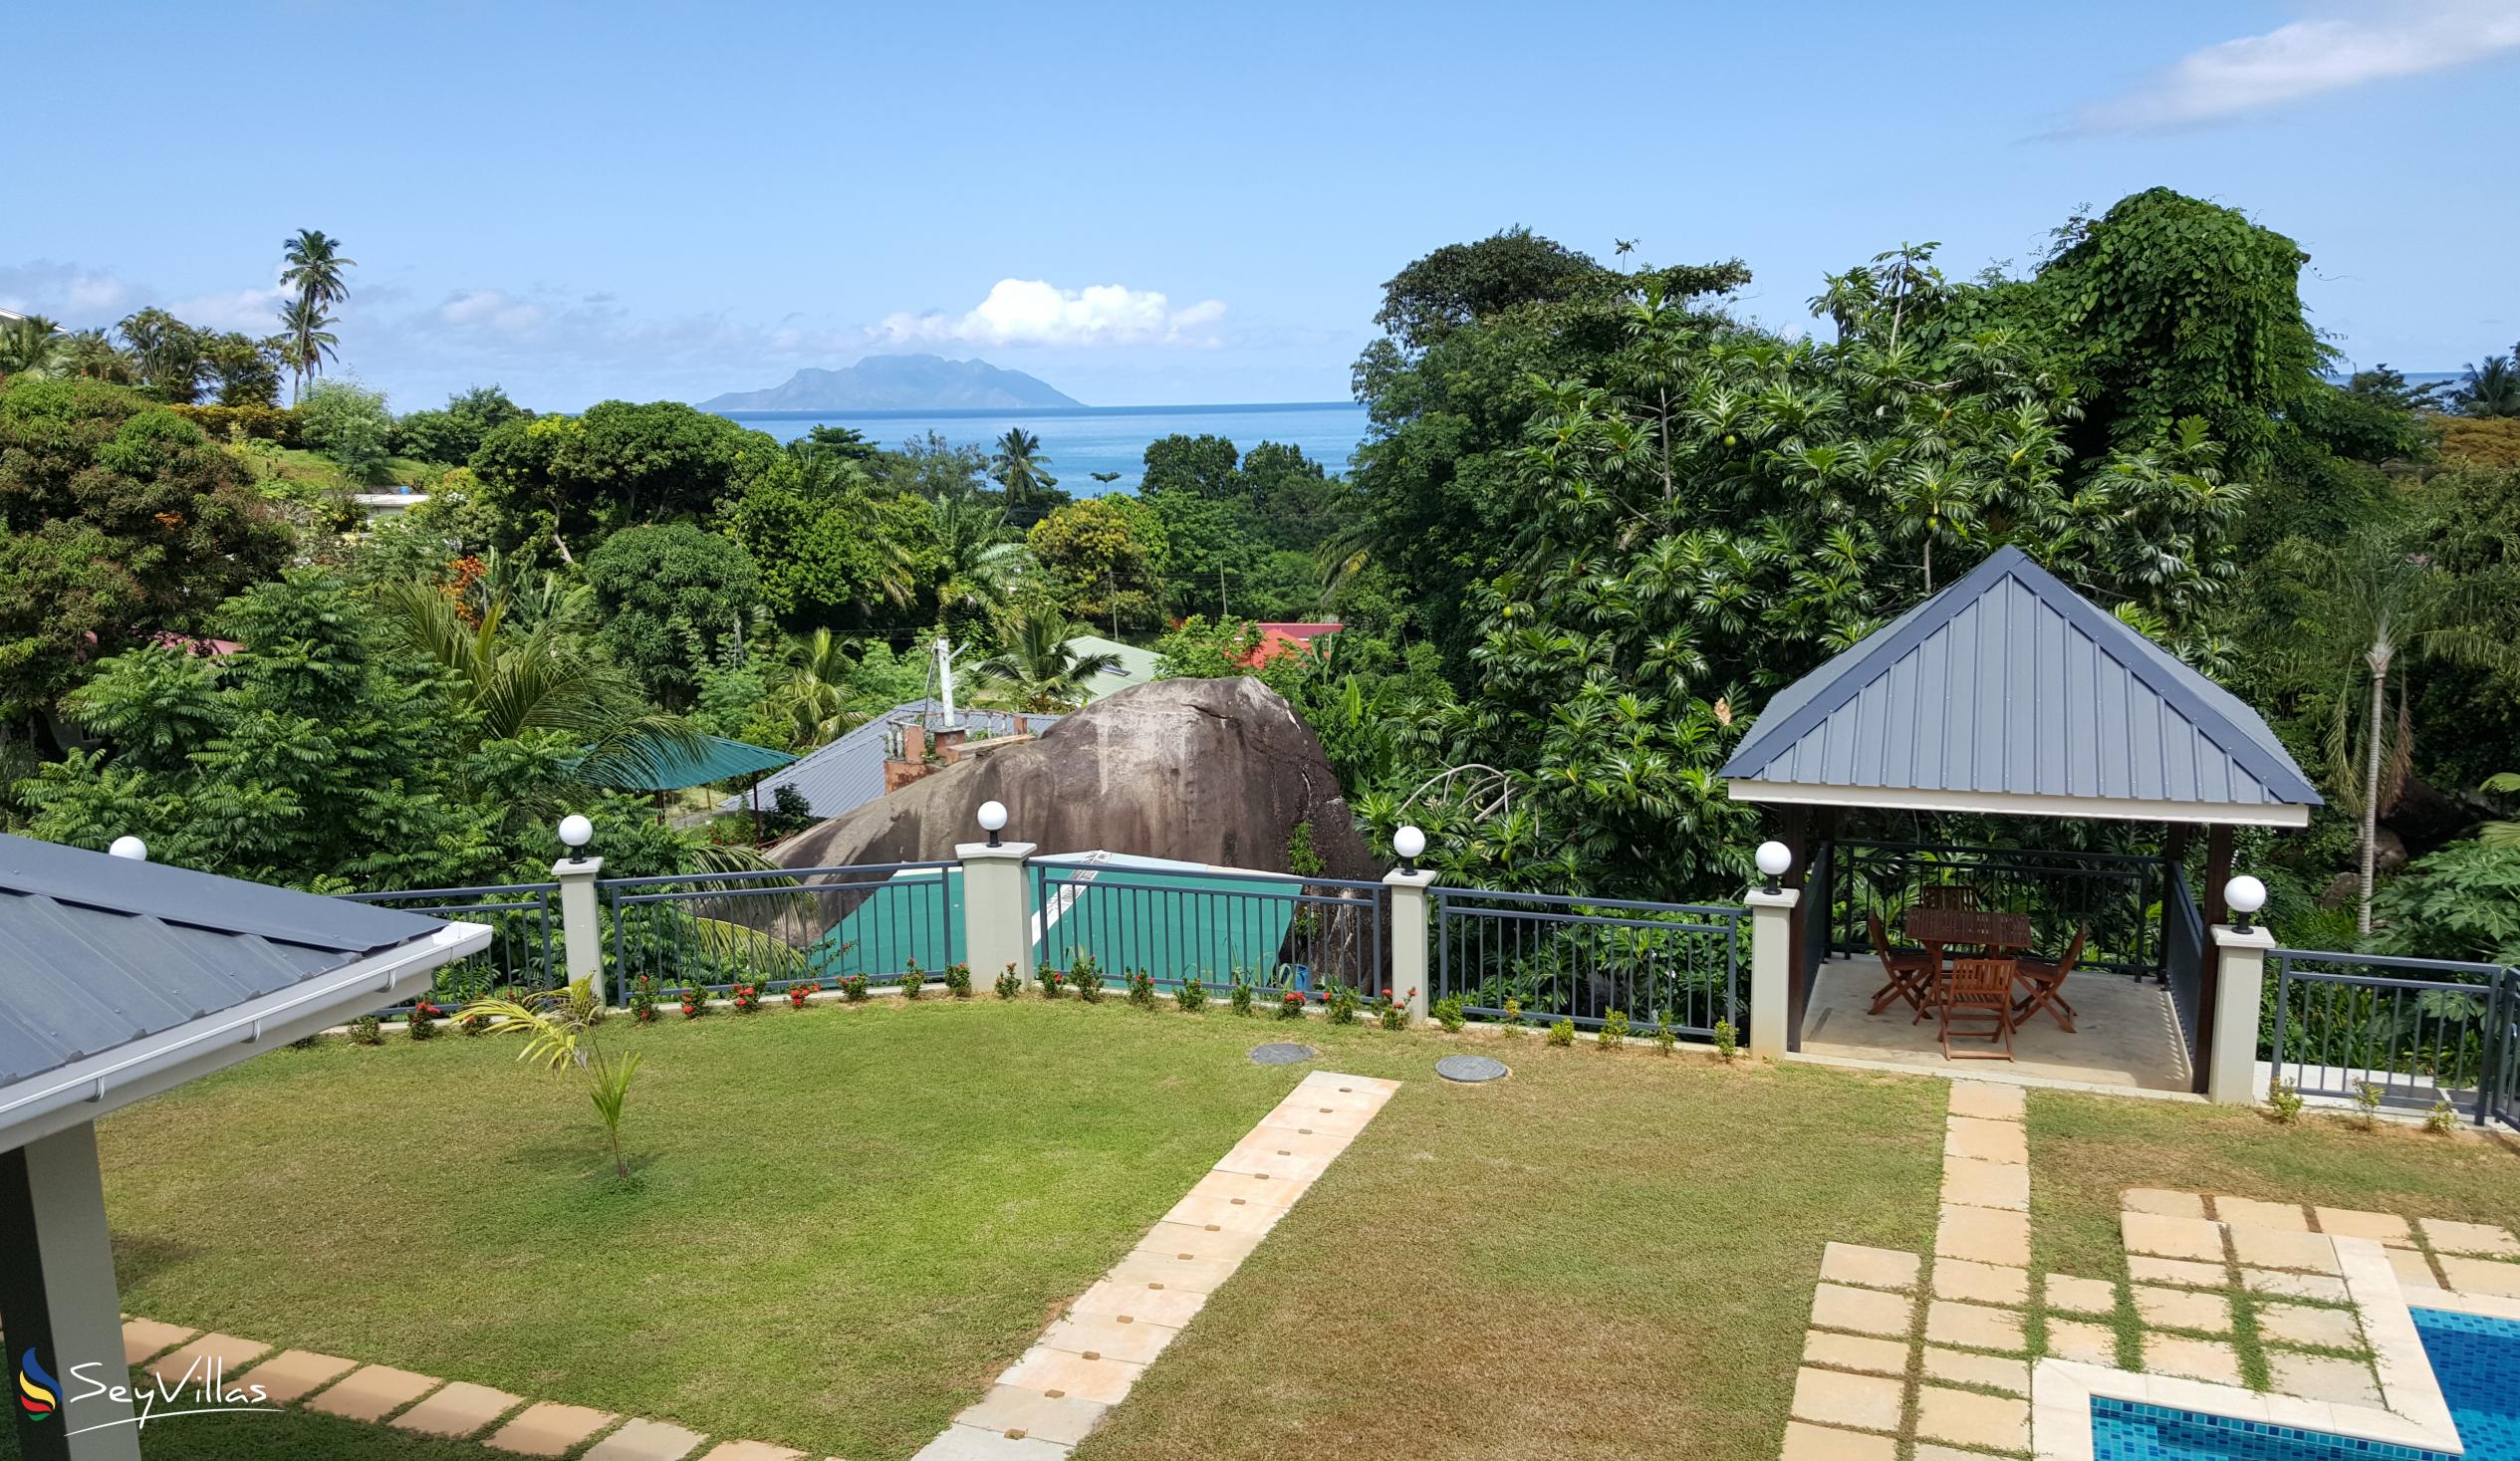 Foto 44: Bambous River Lodge - Appartement mit 2 Schlafzimmern - Mahé (Seychellen)